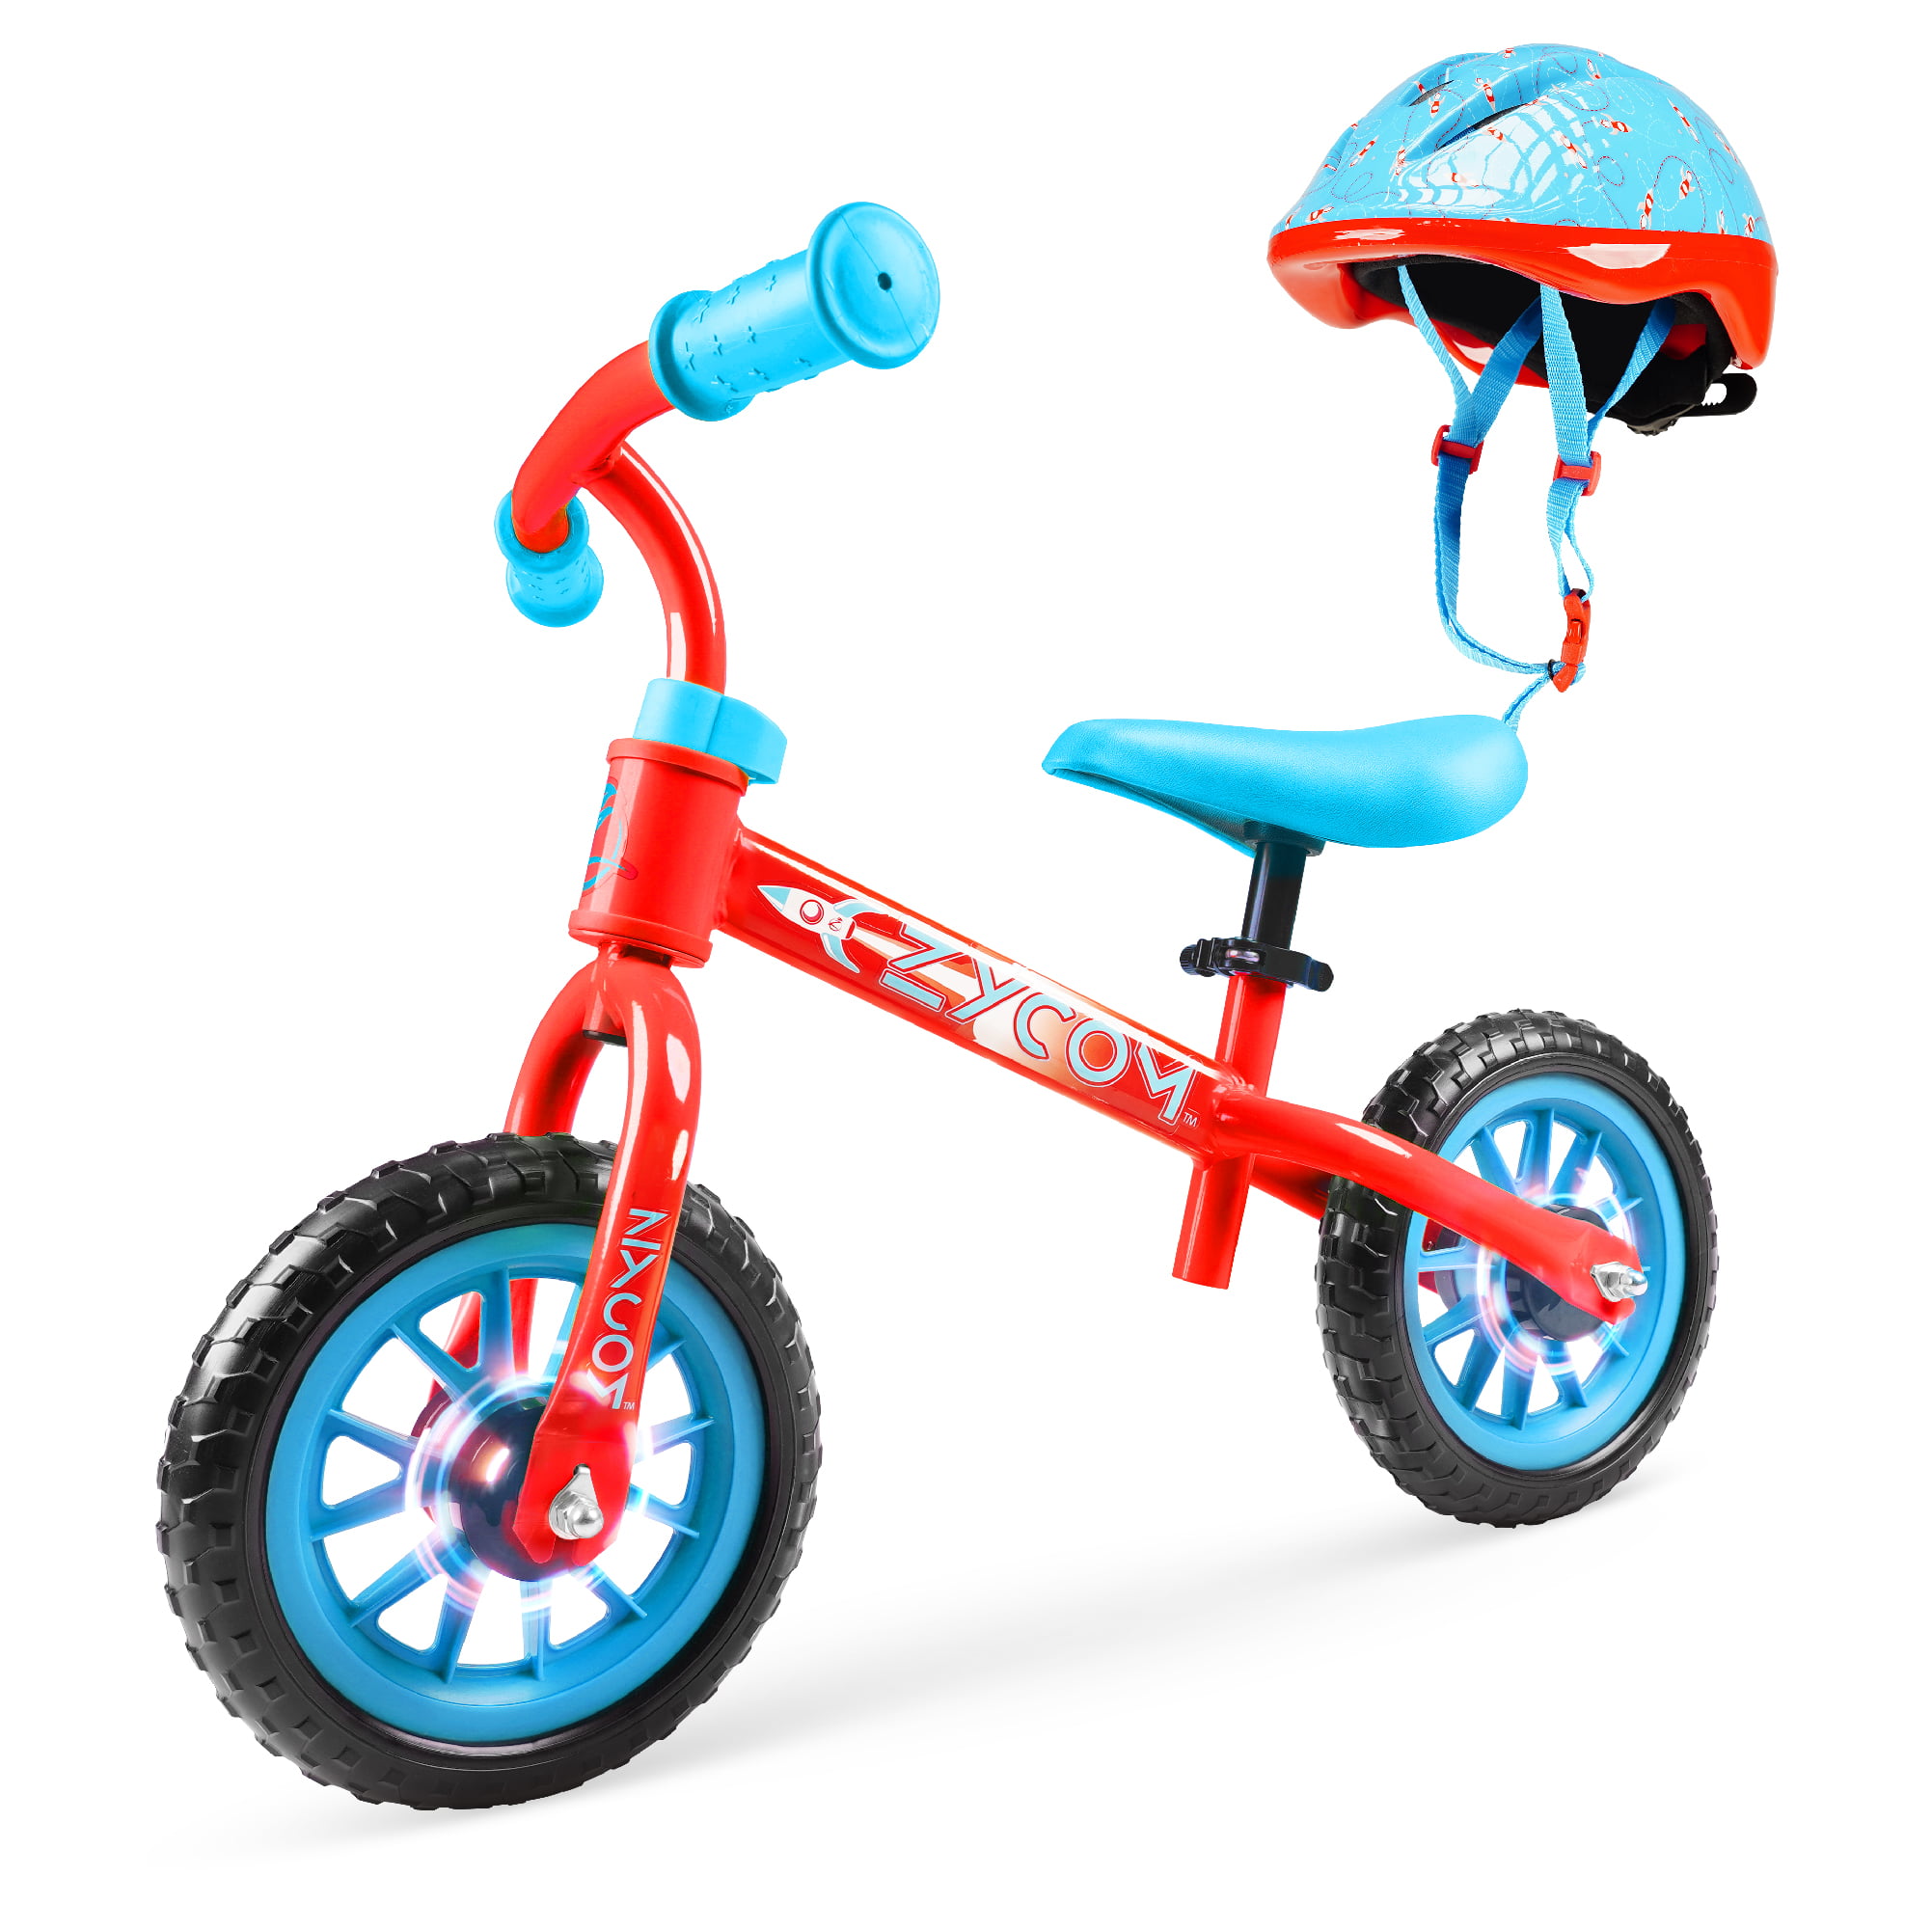 Zycom My 1st Balance Bike Blue Black Lightweight Frame Kids Toddler Ride On Toy 